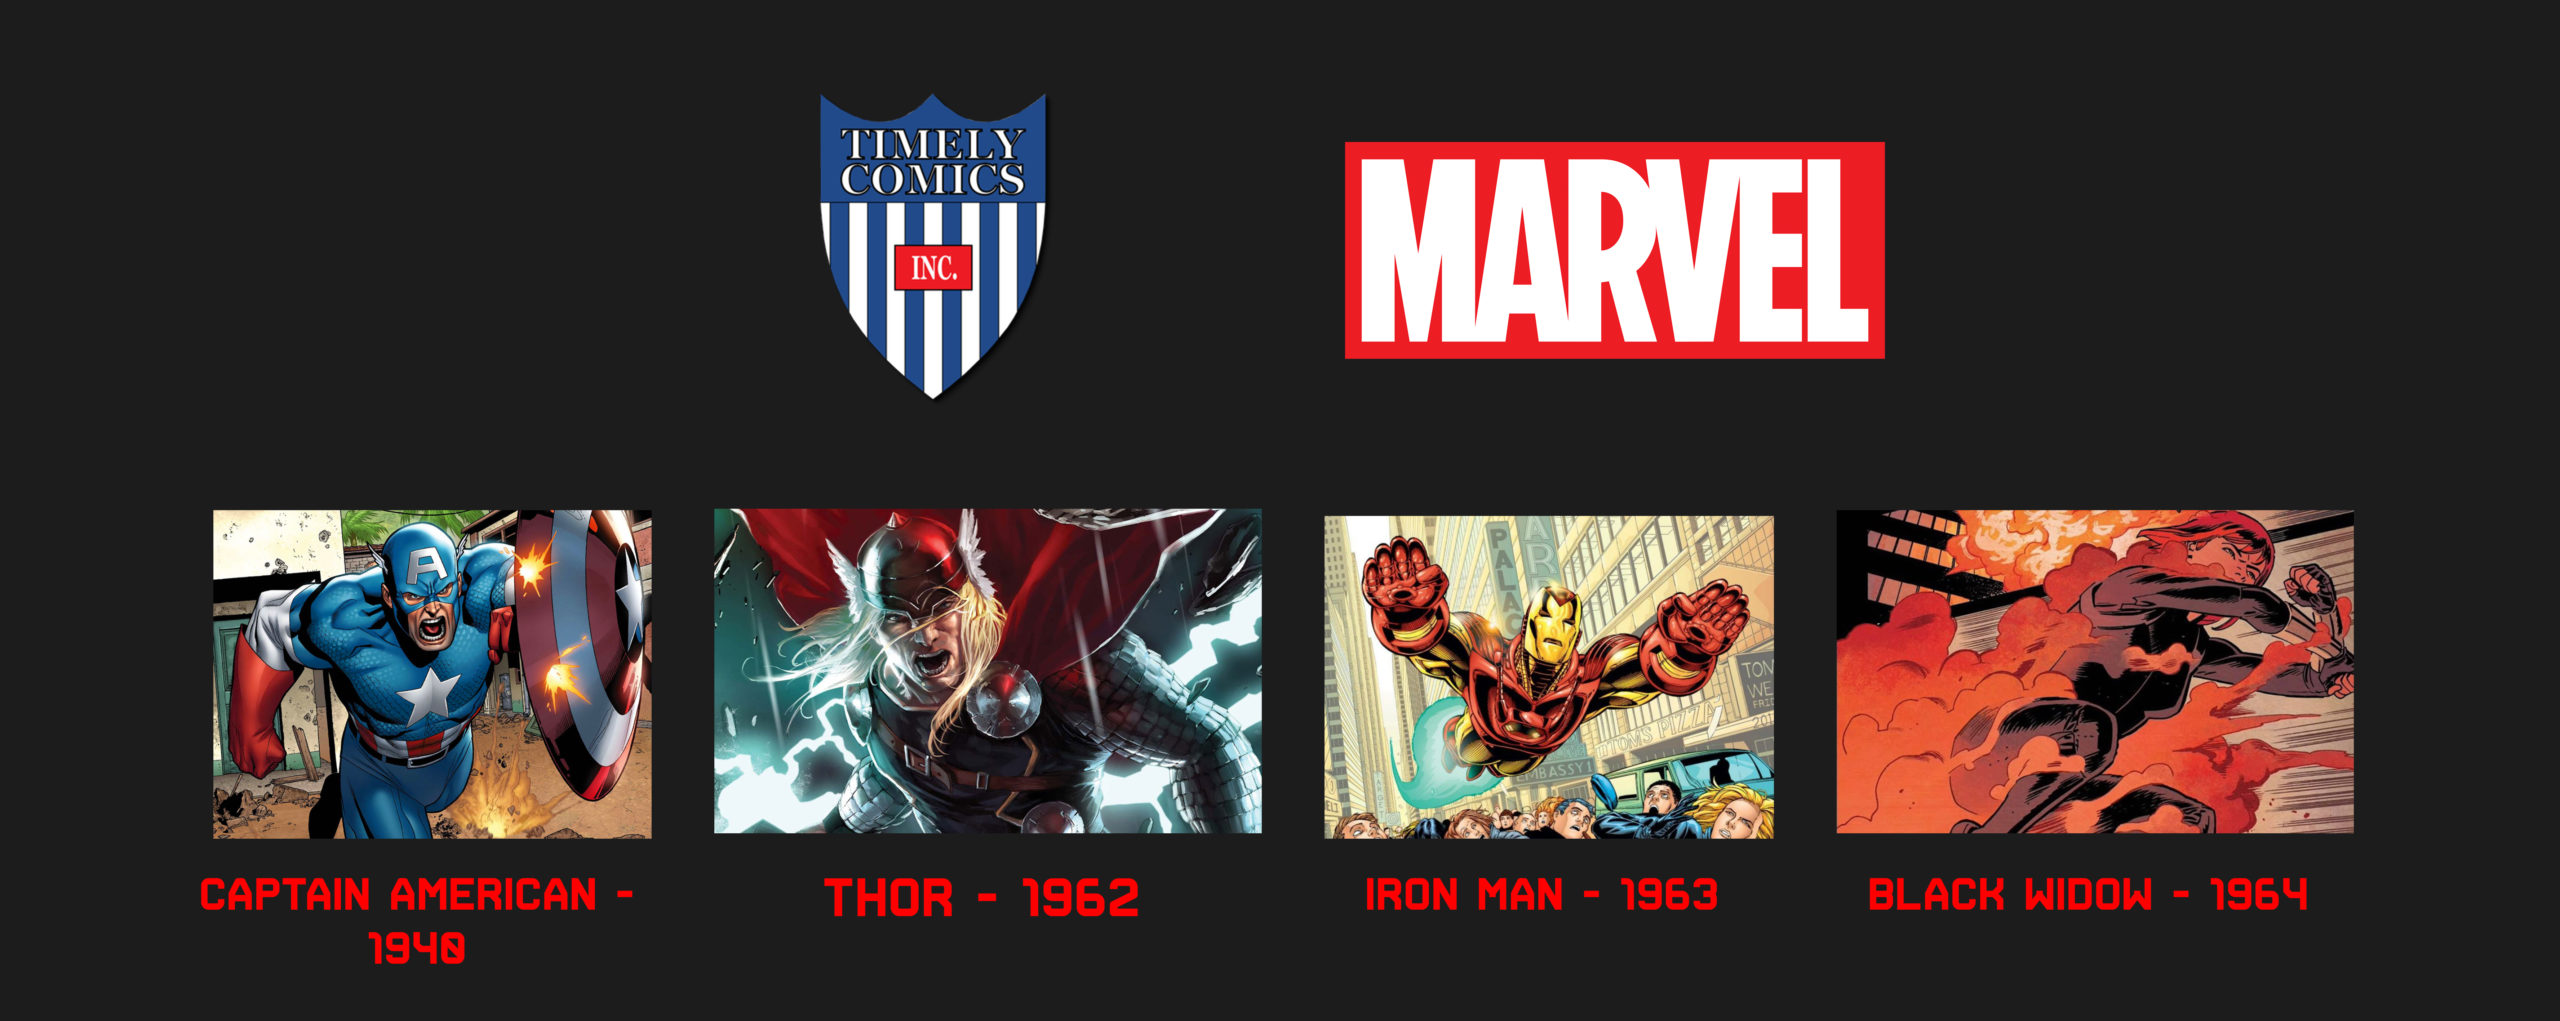 Chronologie début MARVEL TIMELY COMICS - Chronologie début Marvel - Article super-héros 